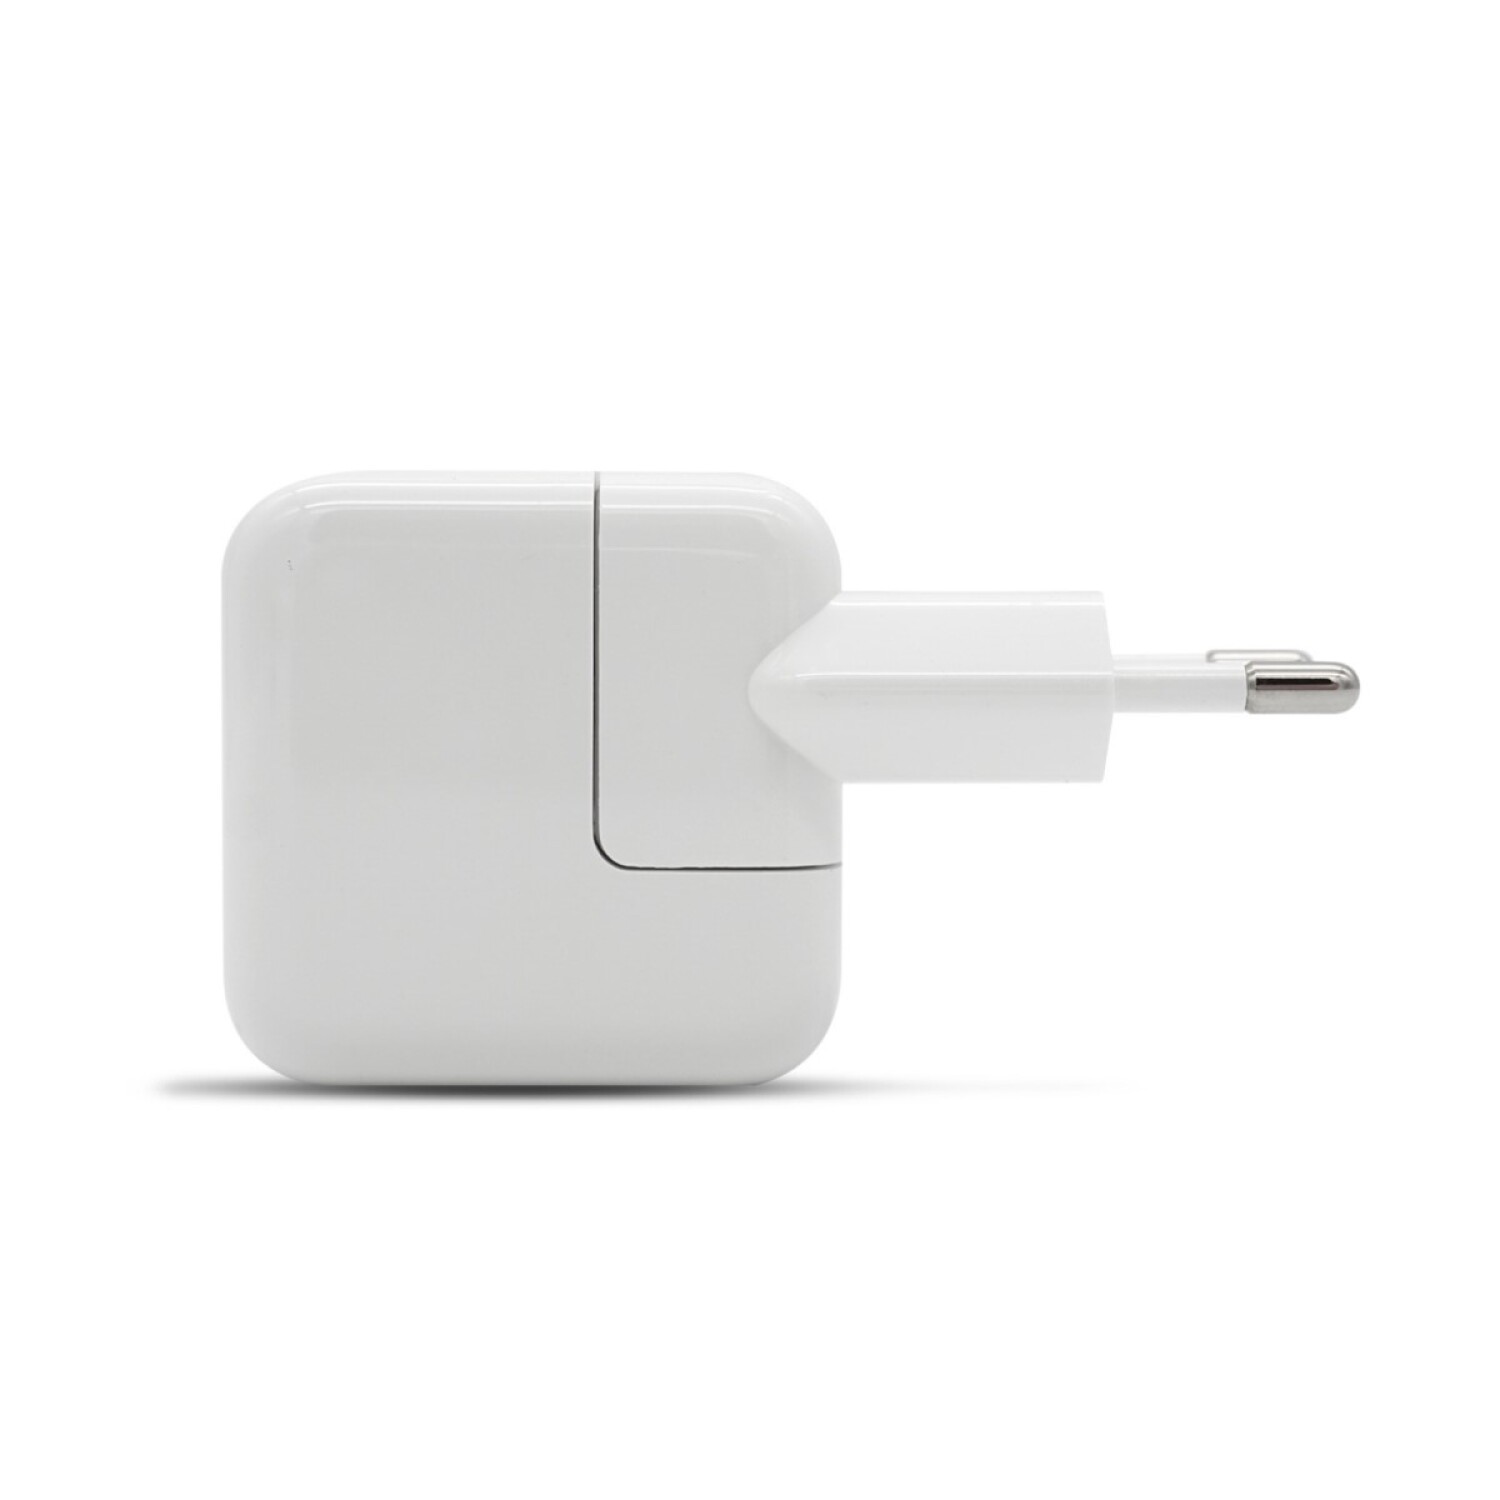 Cargador Original Apple USB de 12W para iPad, iPhone – Carga Rapida